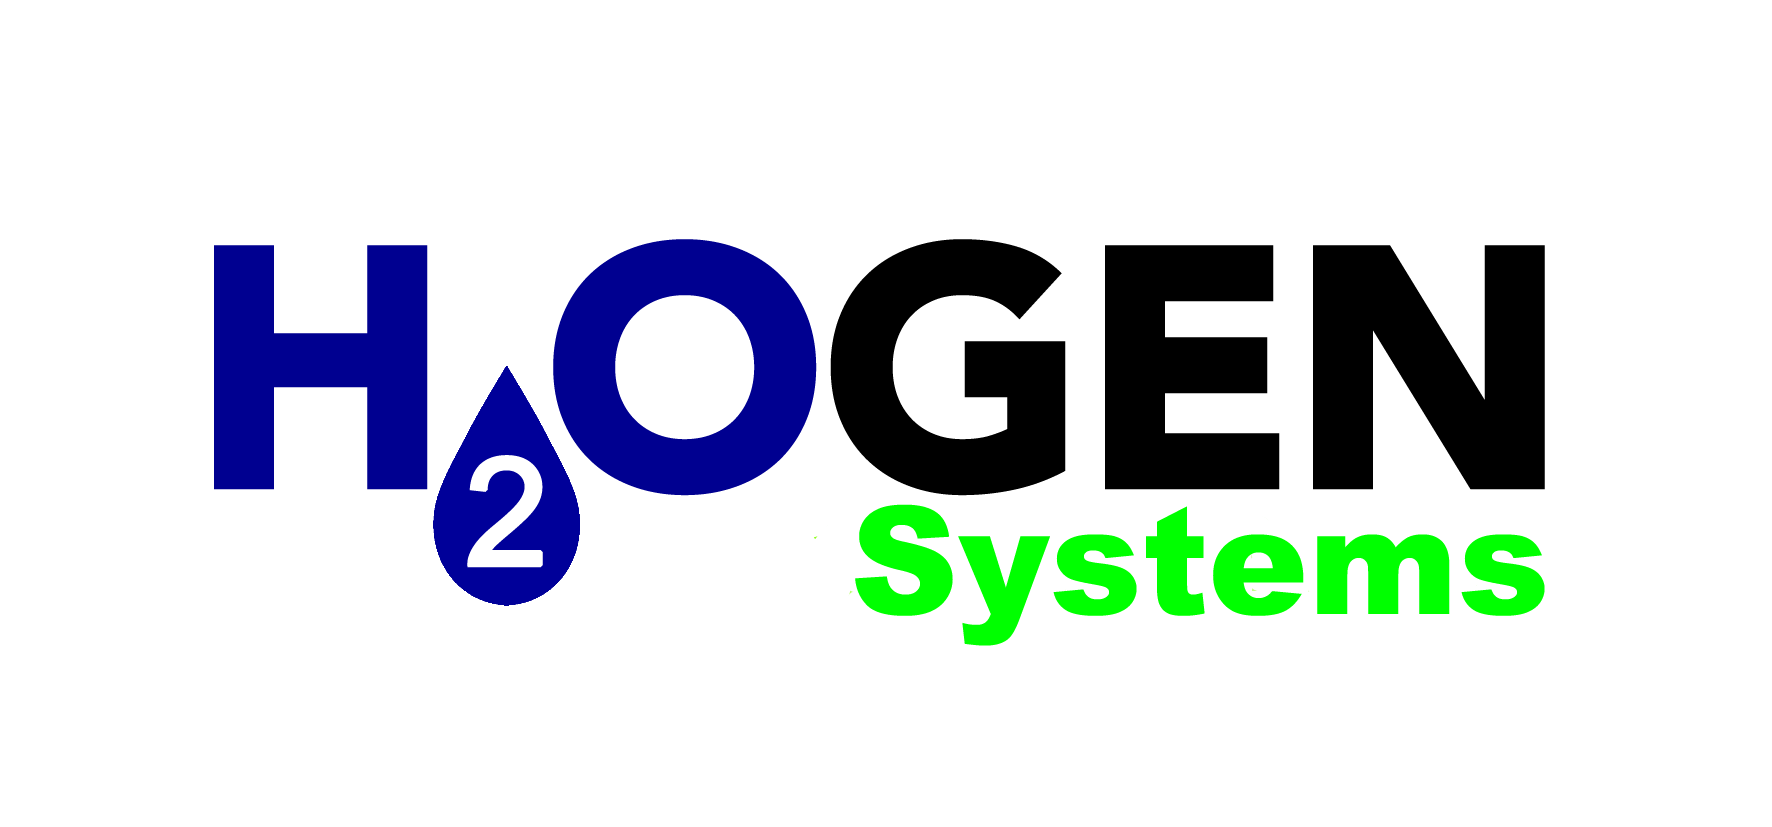 Hogen Systems Ltd